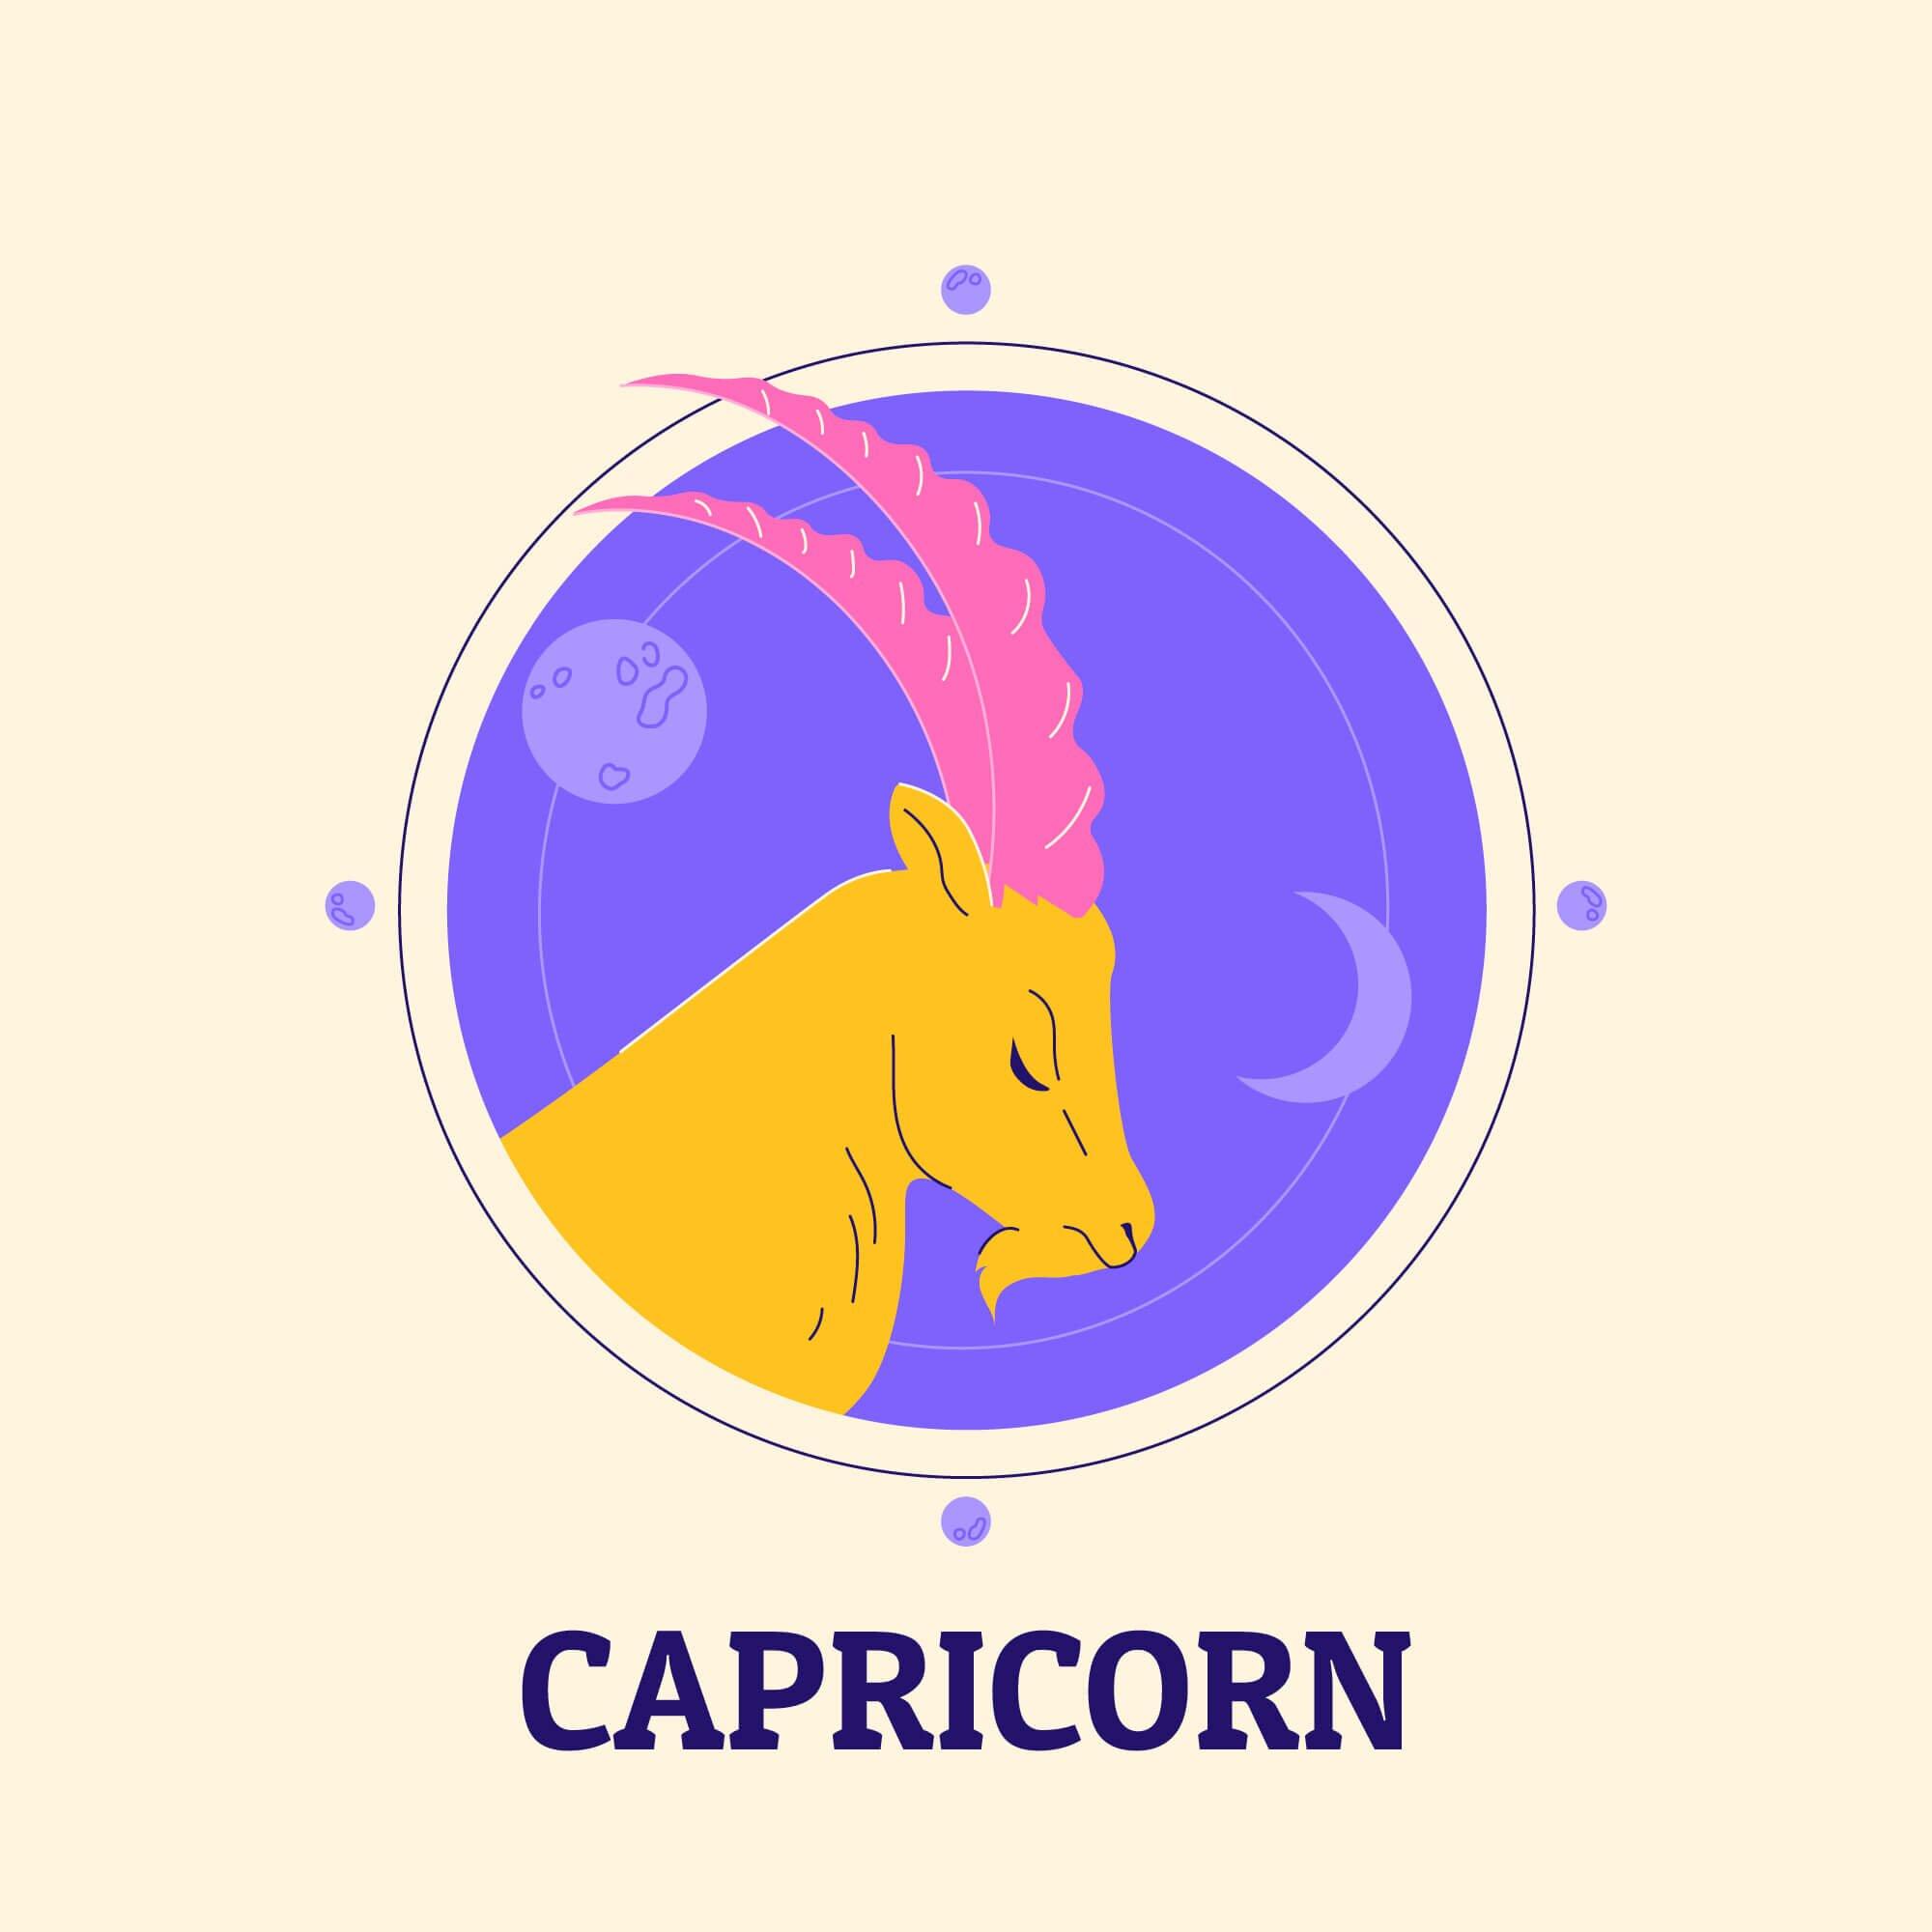 Козерог логотип. Козерог лого. Capricorn logo. Эмблема козерога.